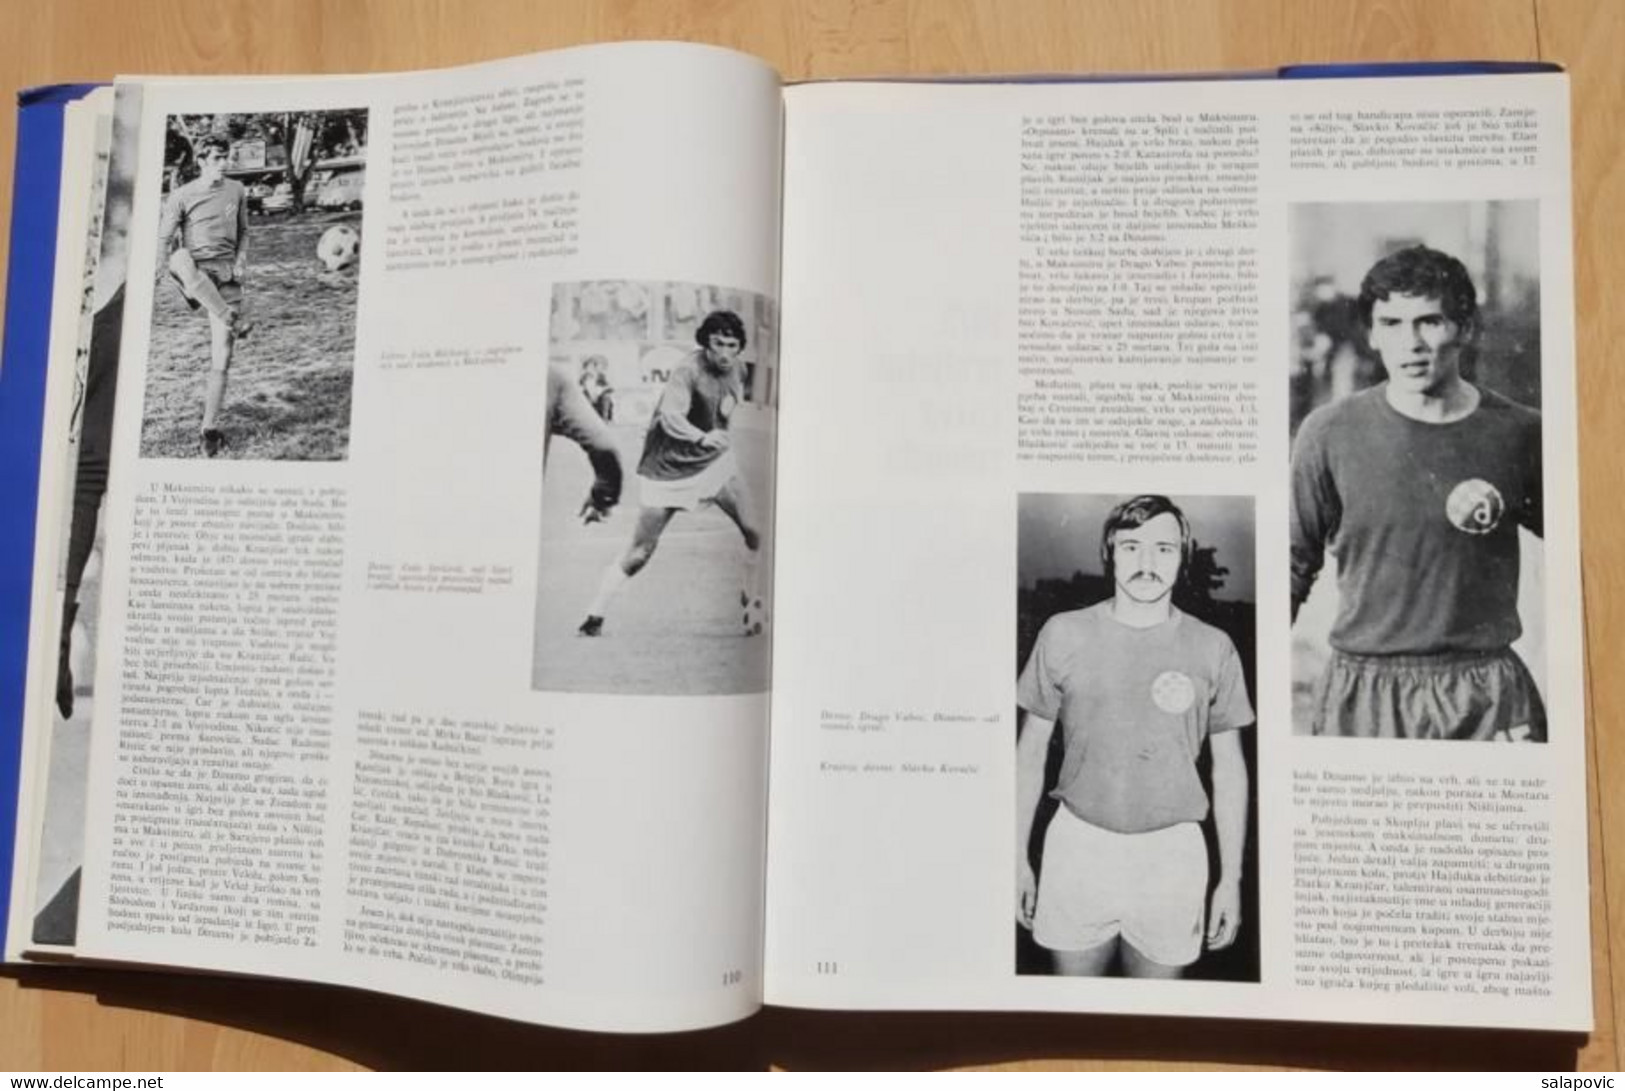 DINAMO ZAGREB 1945-1975 Fredi Kramera, Roman Garber, Zvonimir Magdić Monografija Football Club Croatia, Monograph - Libri